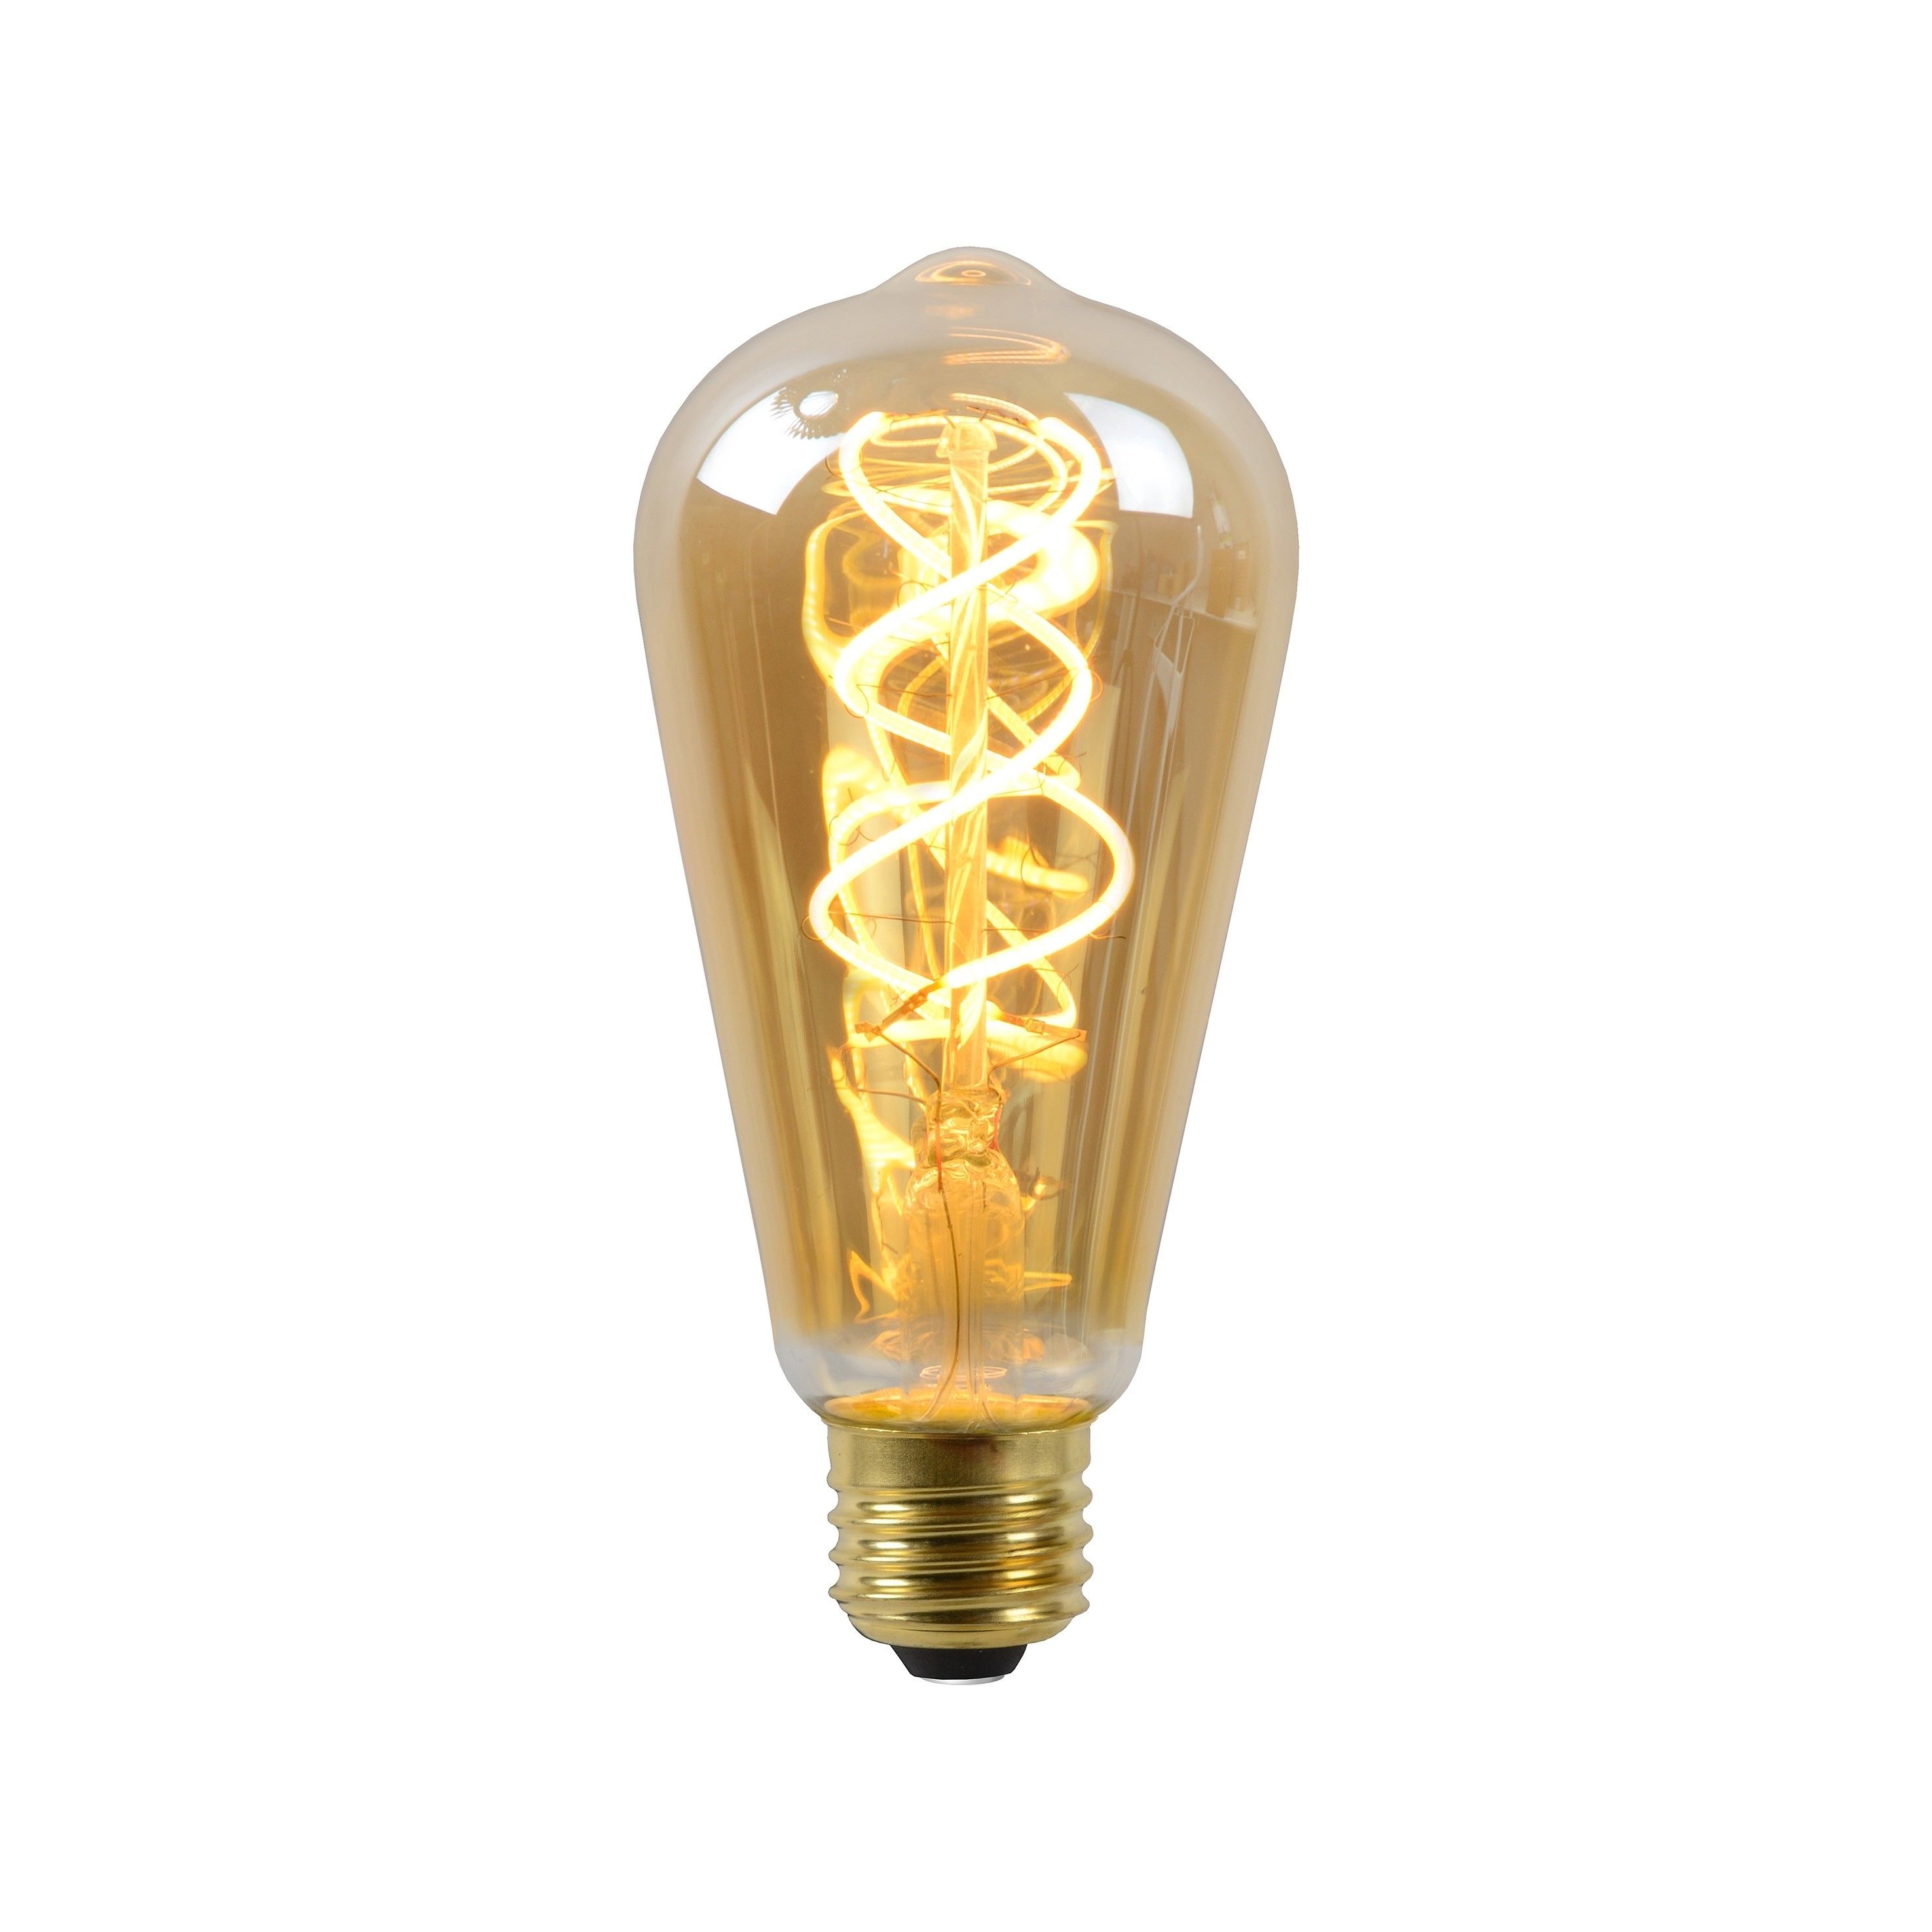 Klusjesman klink Stout Lucide LED Bulb Twilight Sensor - Ø 6 cm - E27 - 4W niet dimbaar - 2200K -  amber | Lichtkoning